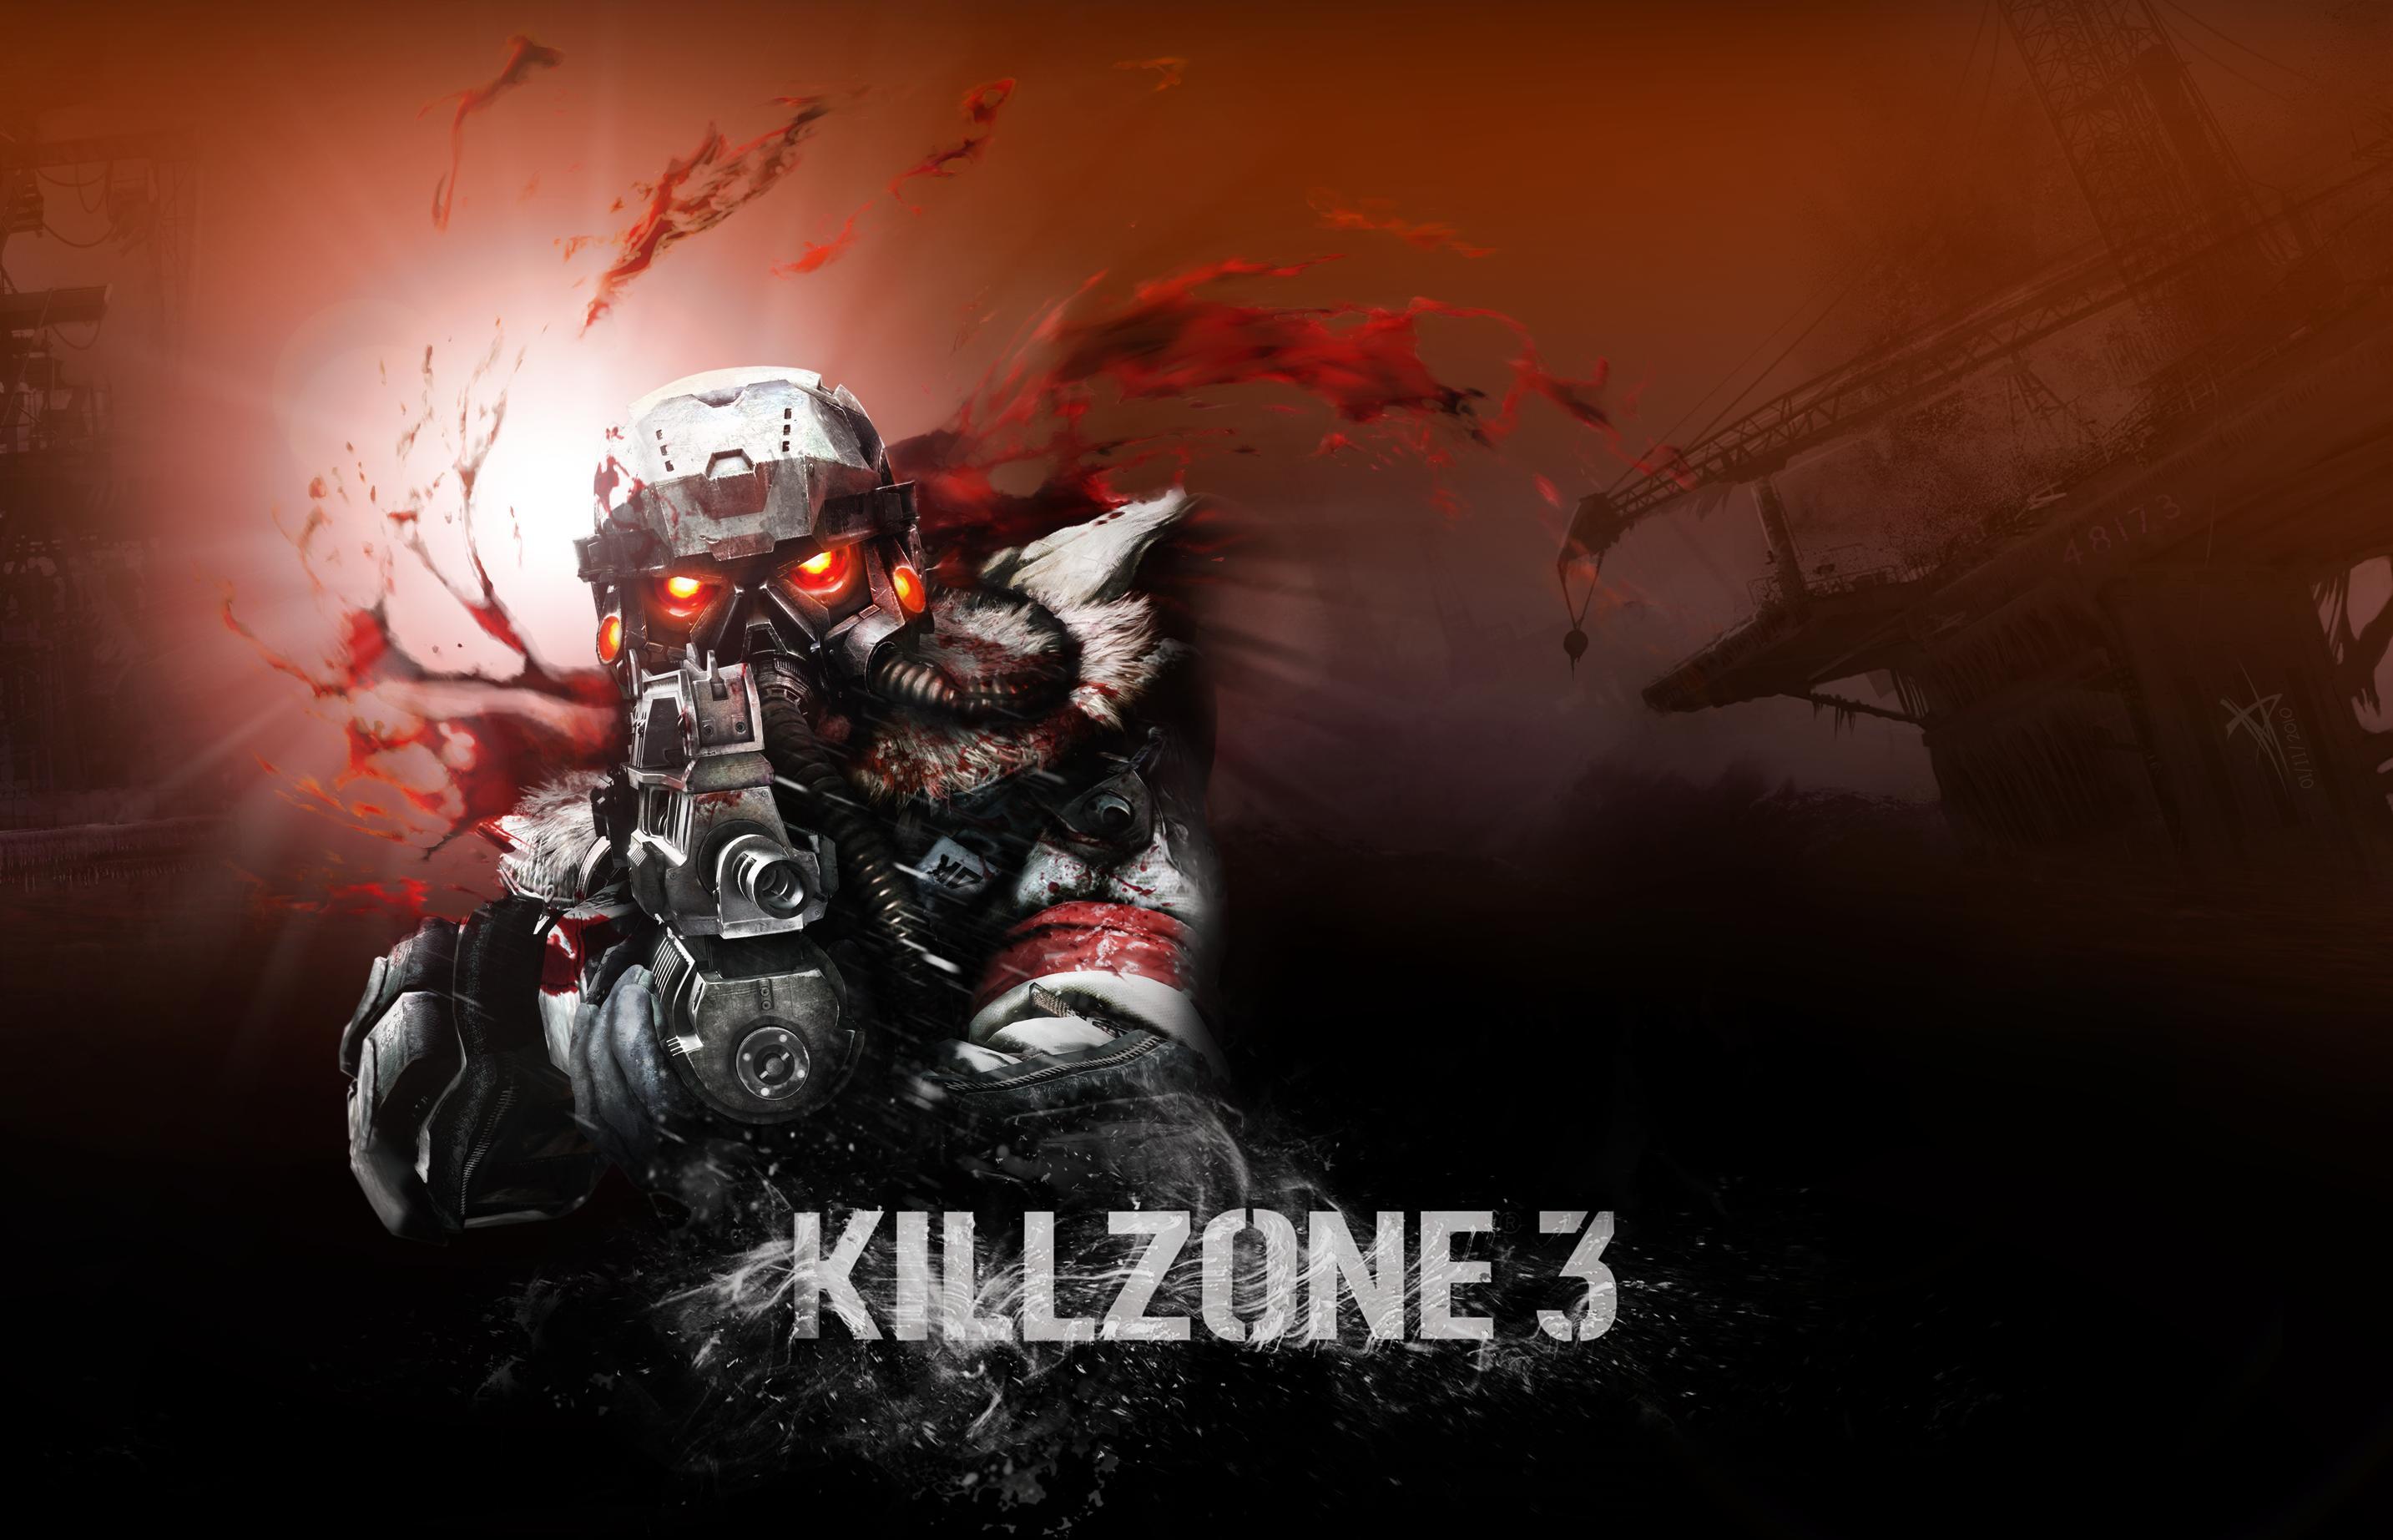 Killzone 3 Wallpaper